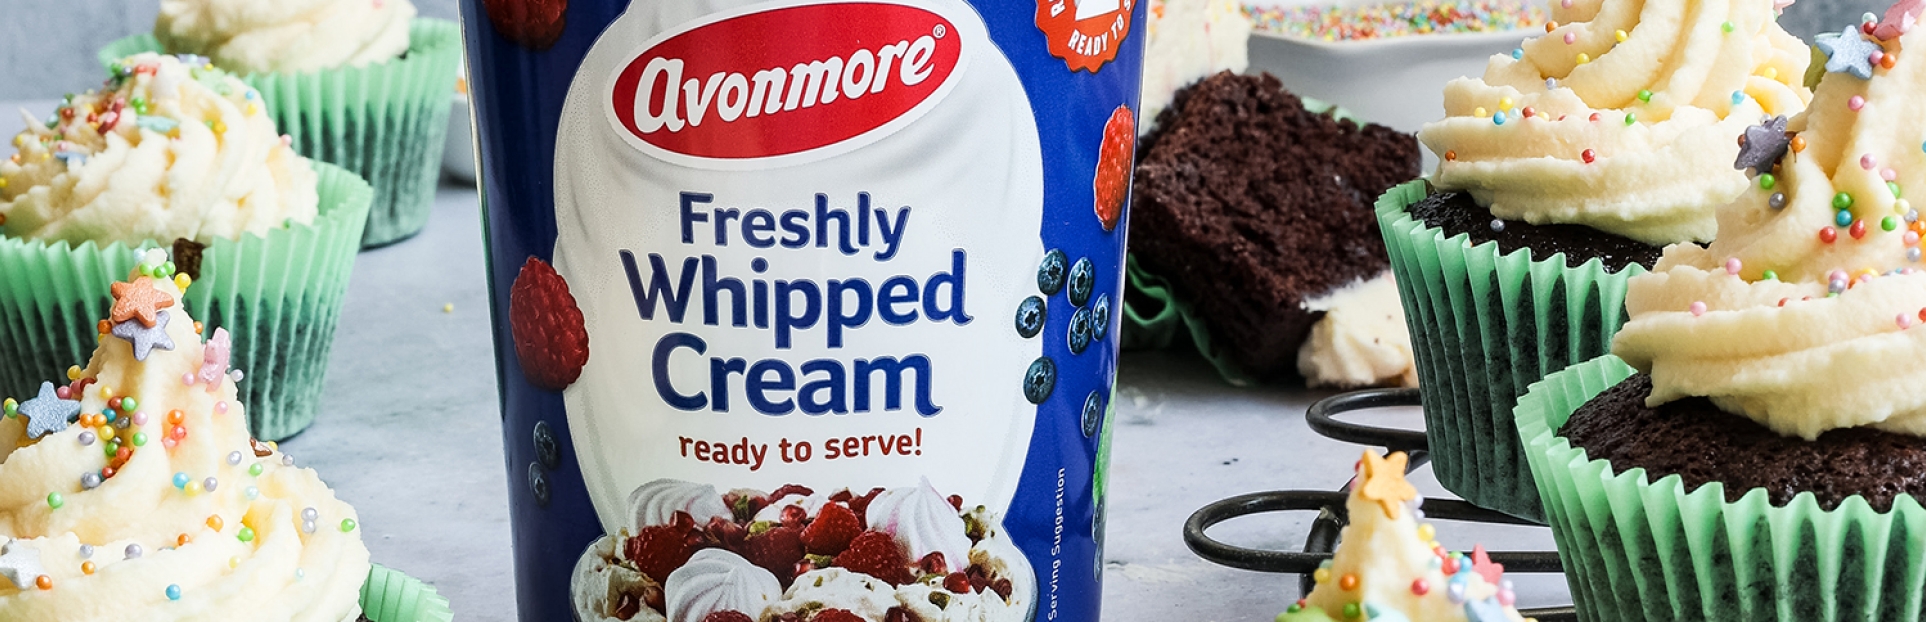 avonmore whipped cream and cupcakes